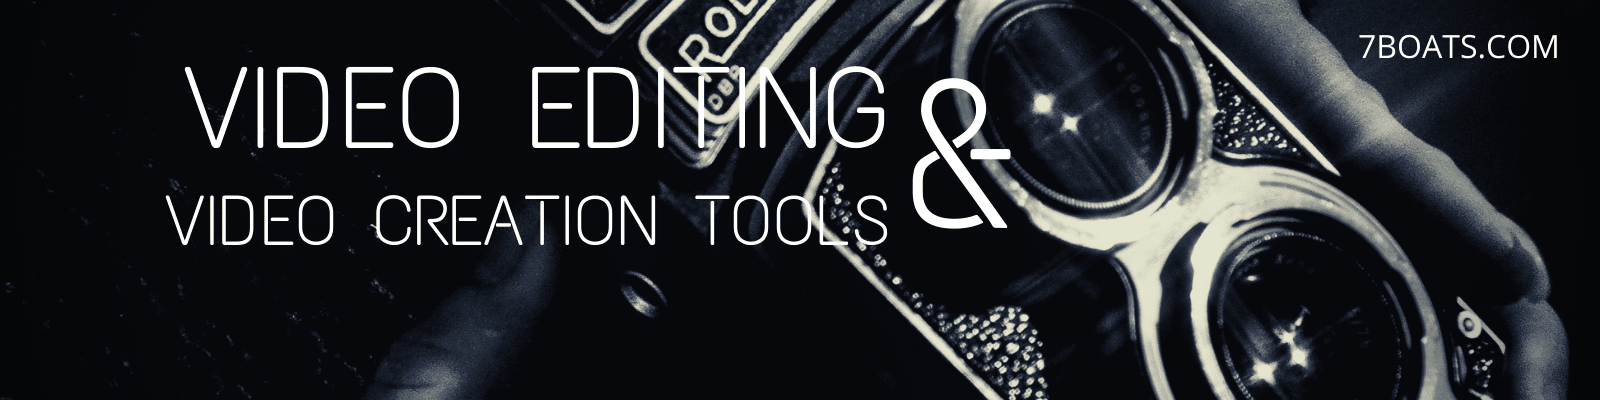 Video Editing Tools & Video Creation Tools